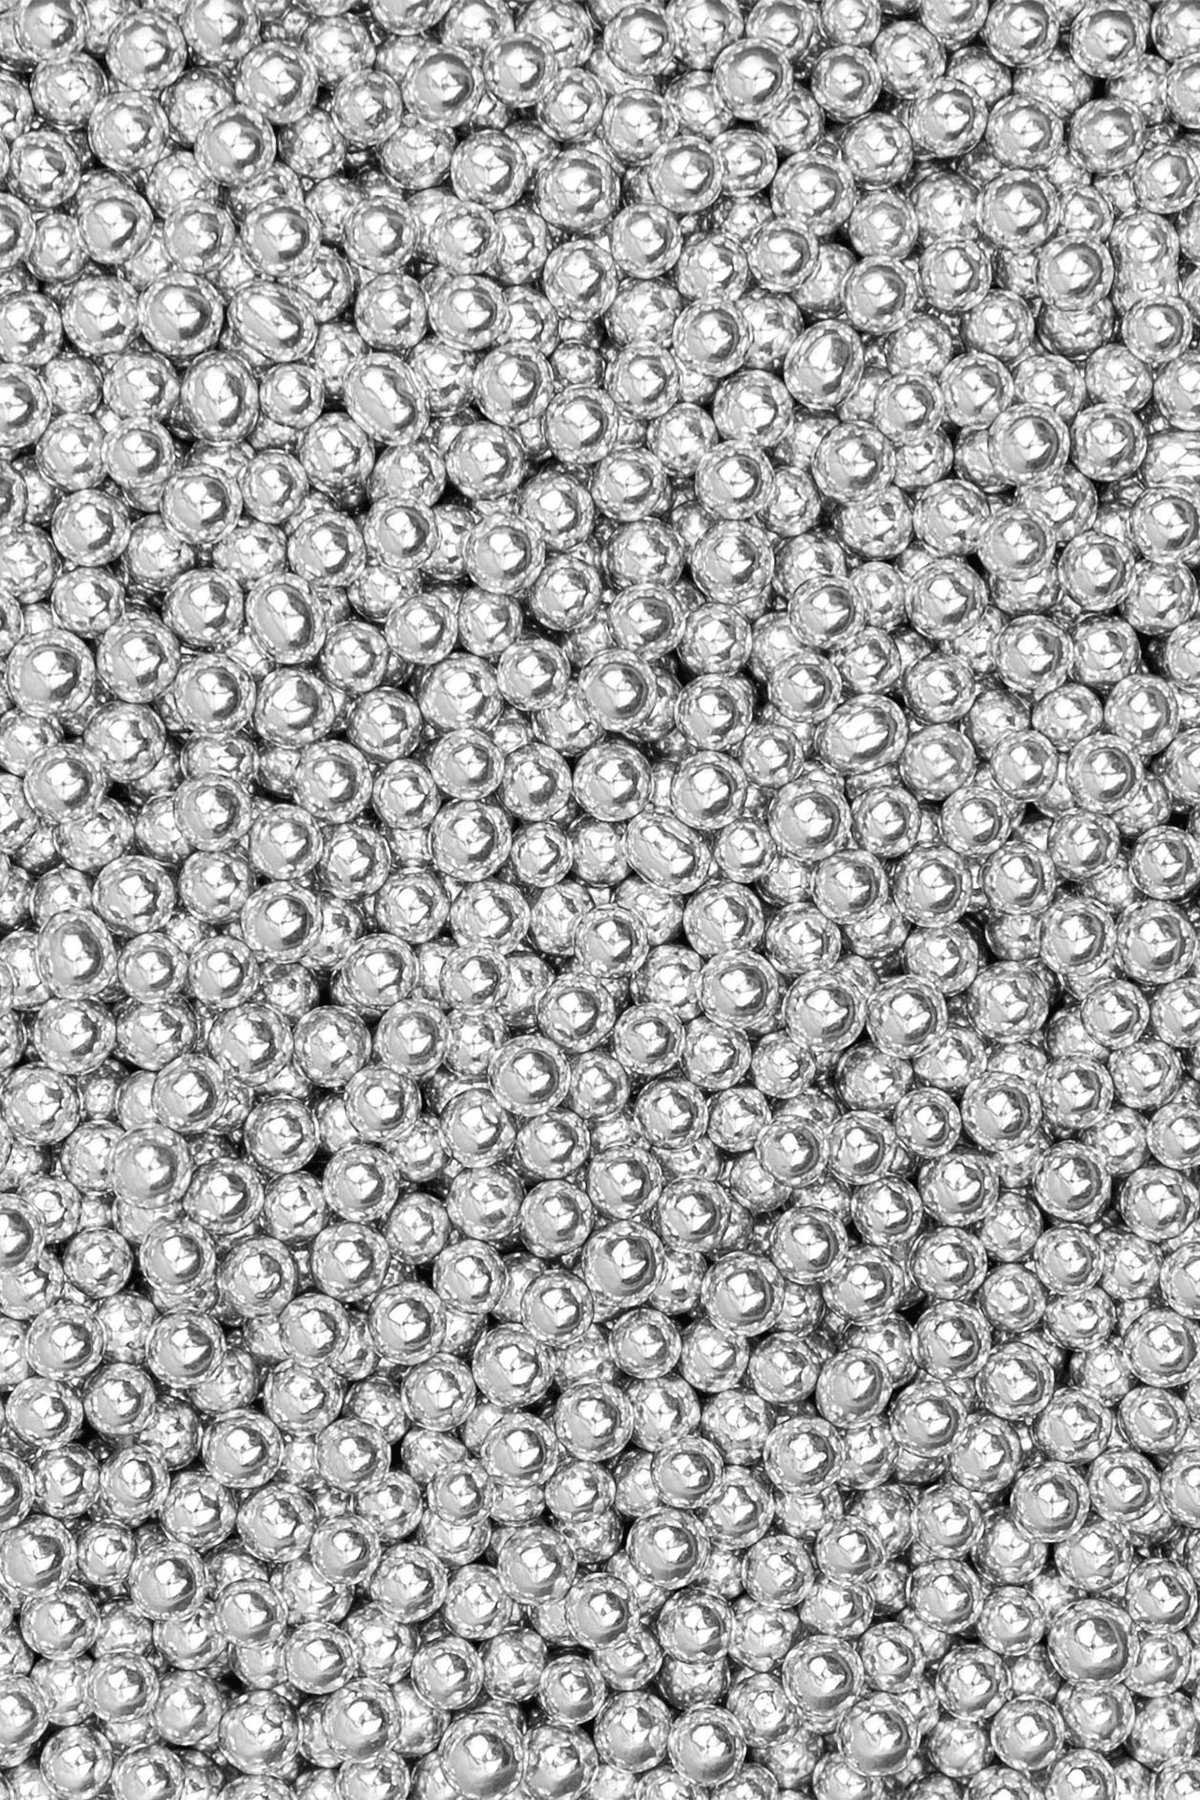 Chocolate Balls - Silver - (Small/6mm) Sprinkles Sprinkly